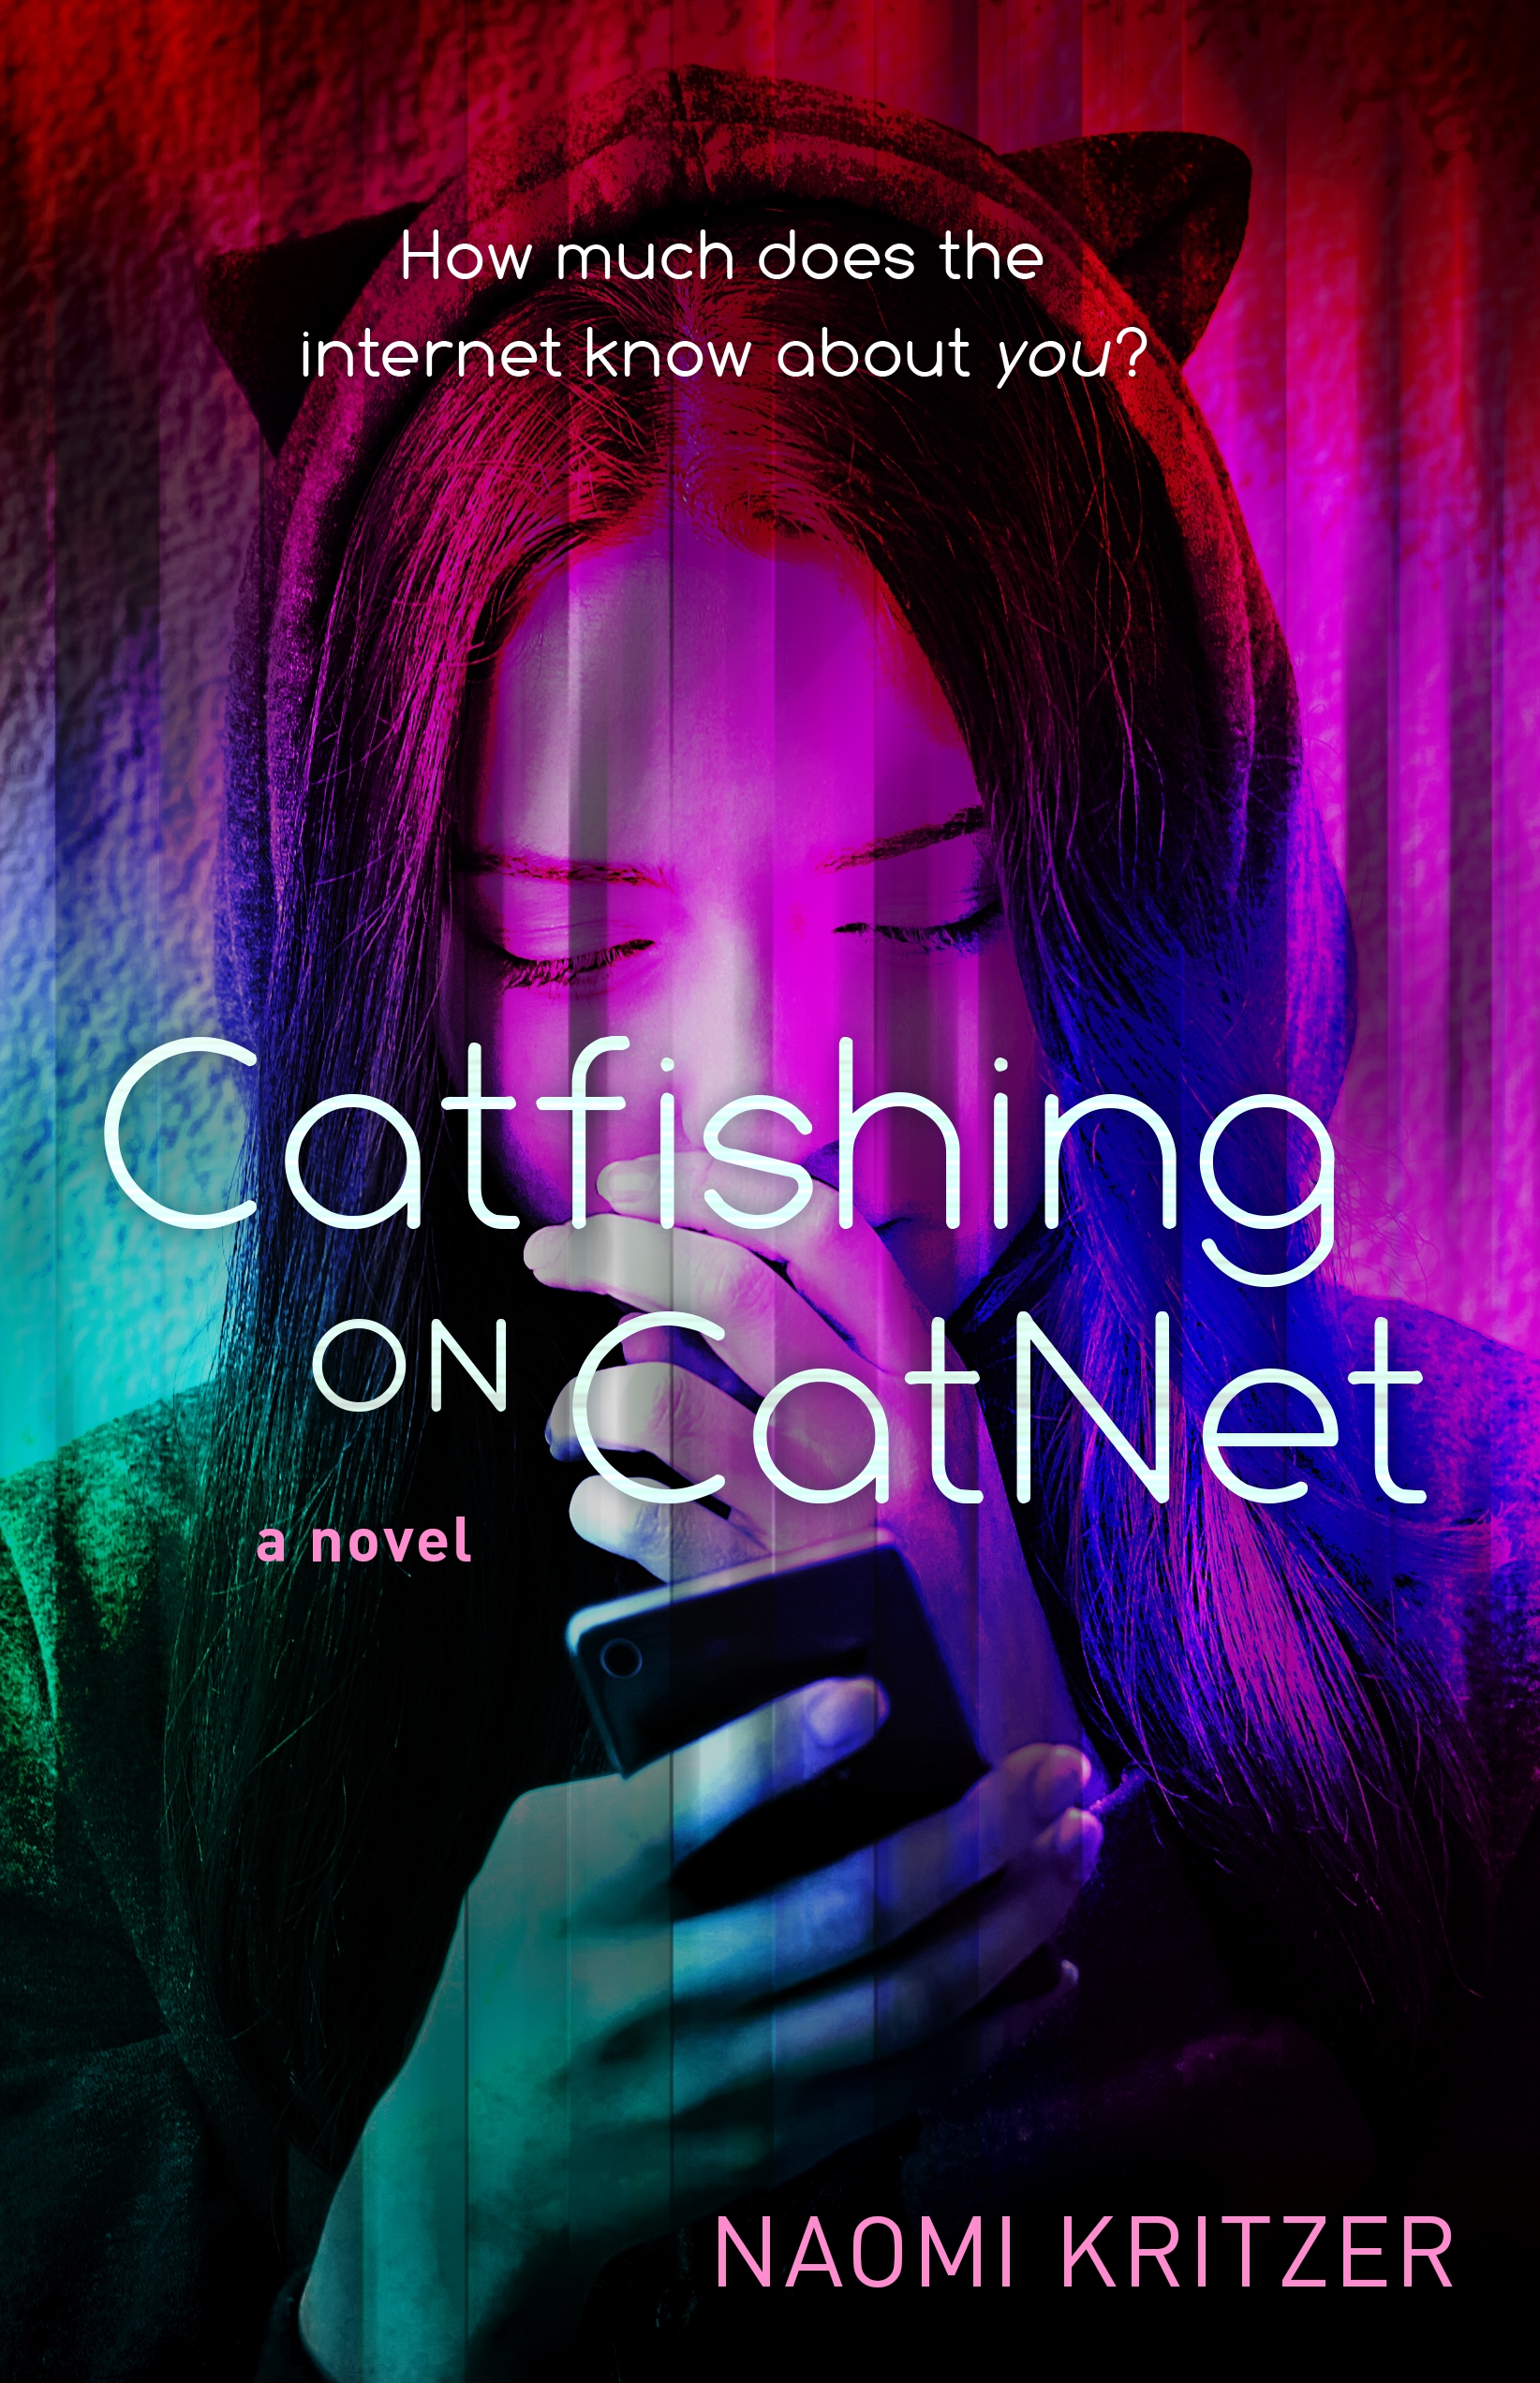 Catfishing on CatNet : A Novel by Naomi Kritzer